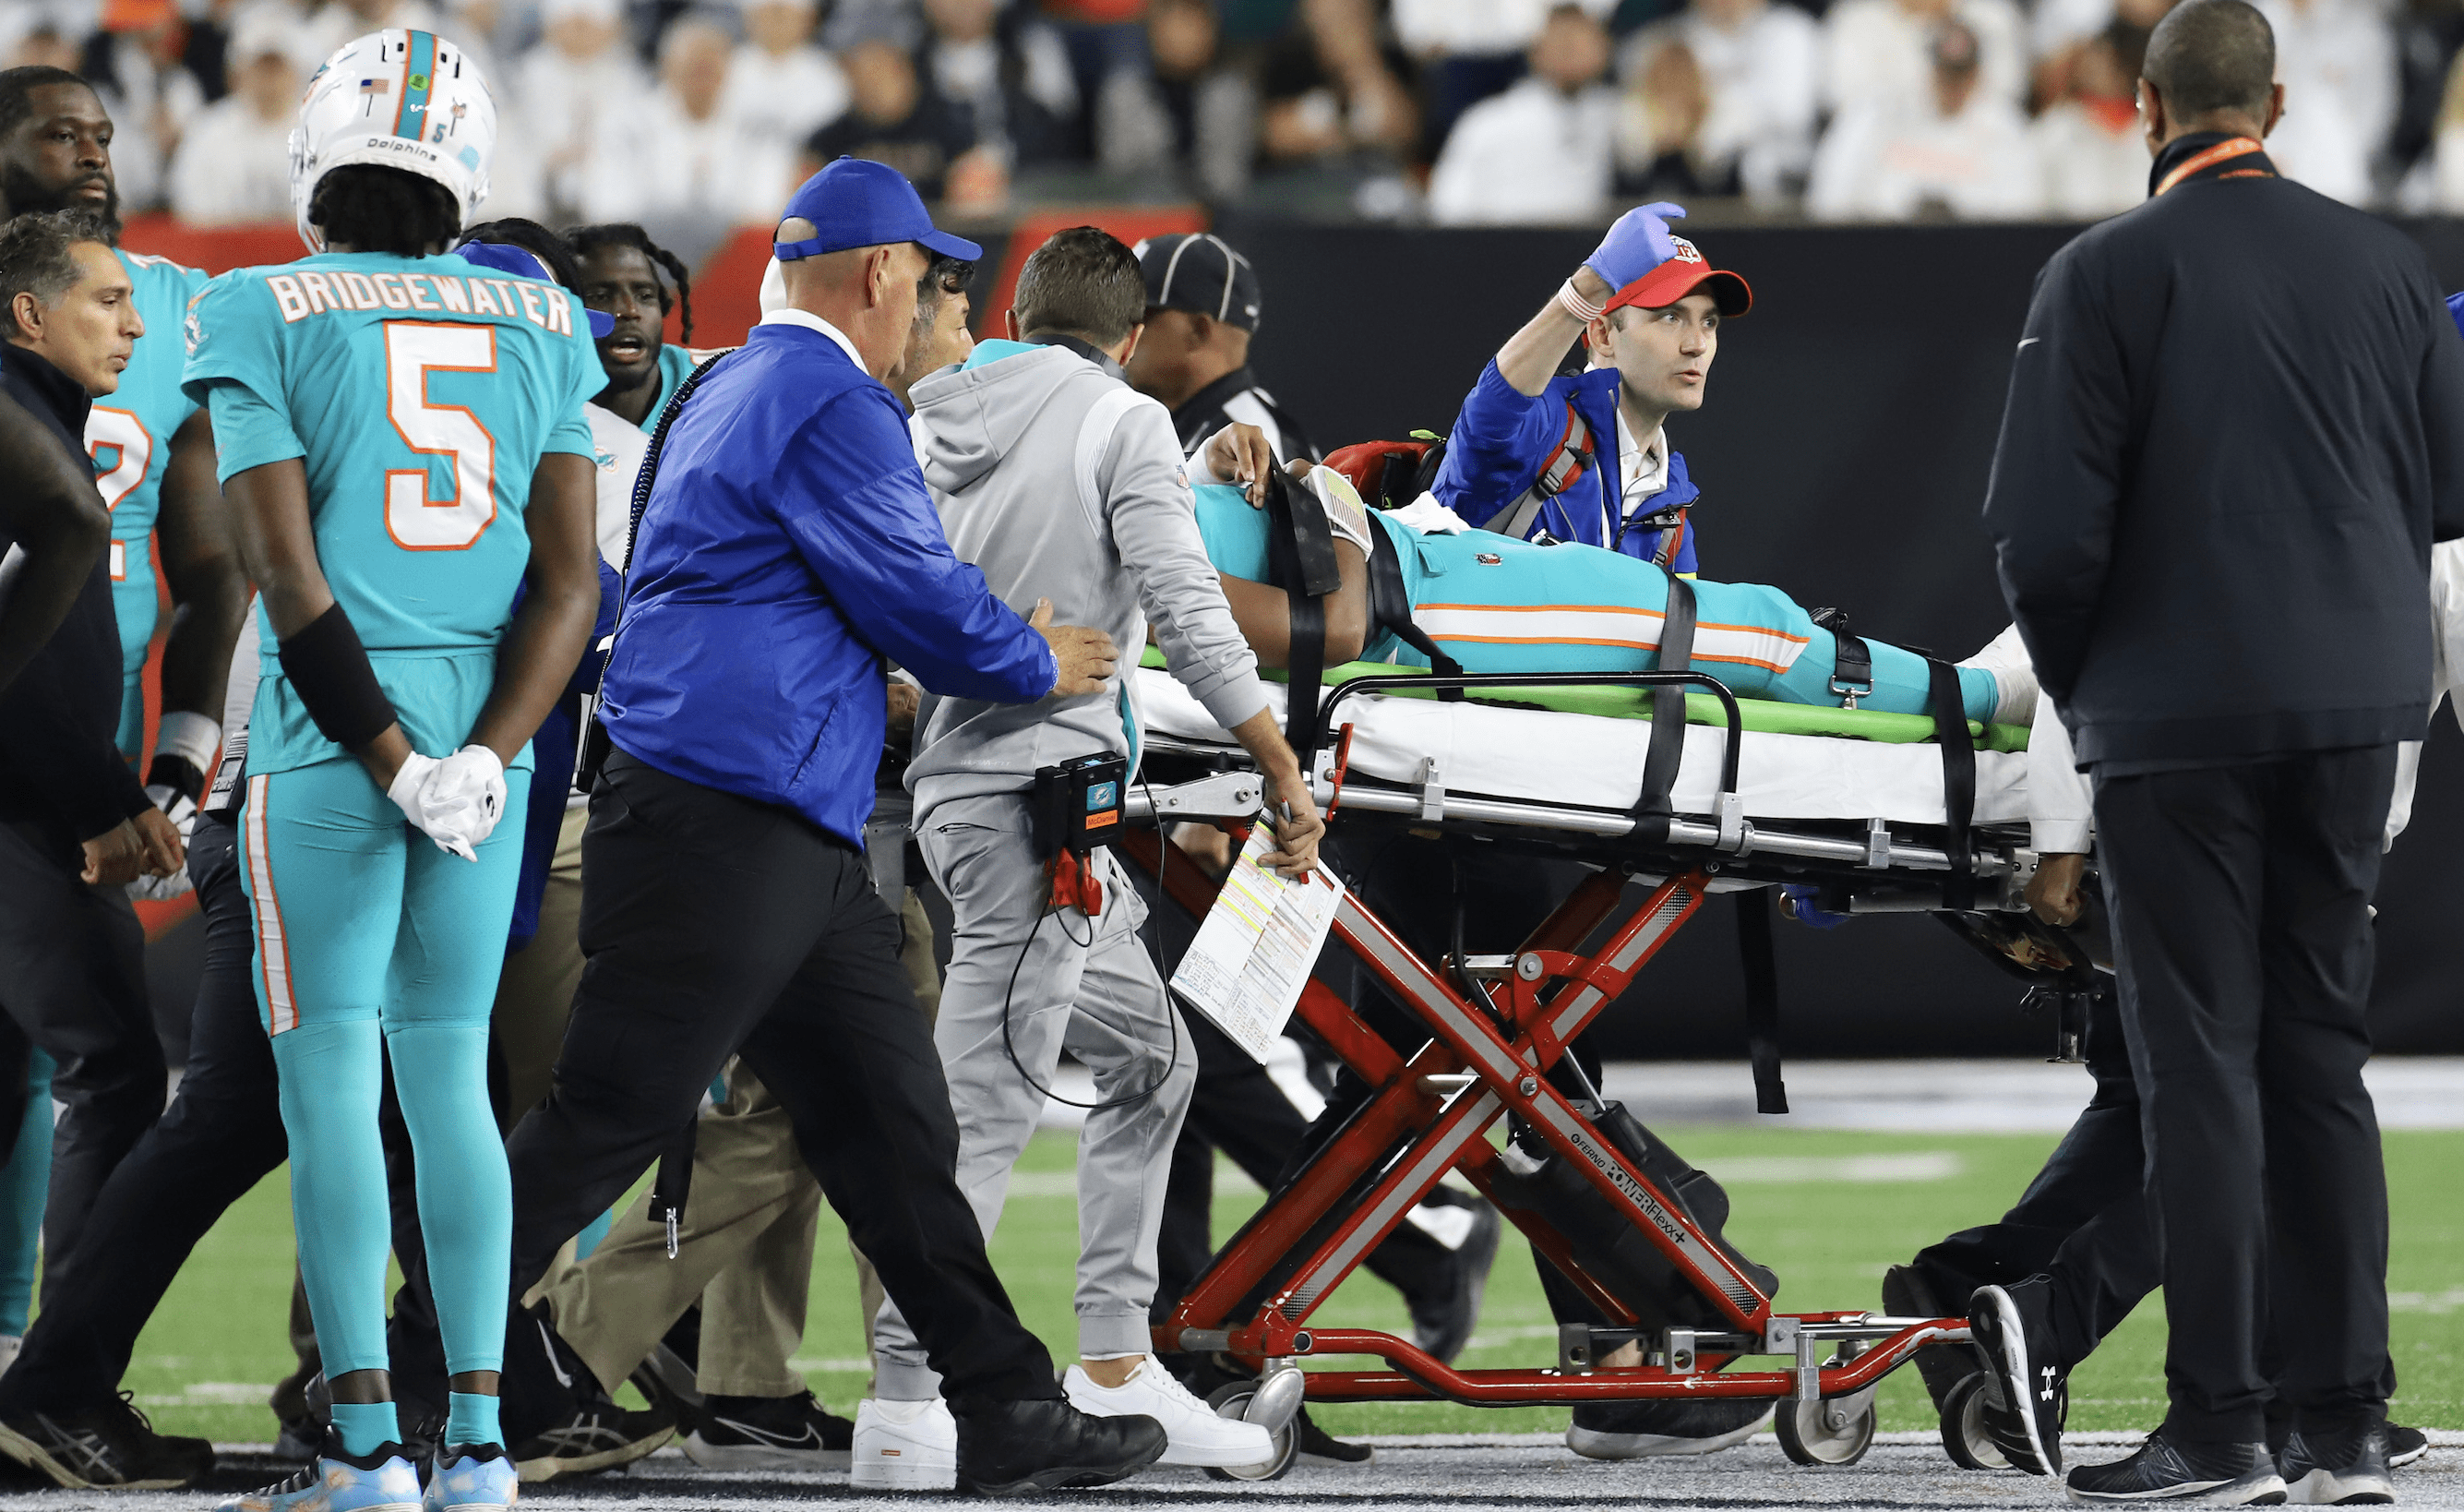 watch:-star-nfl-quarterback-rushed-to-the-hospital-after-devastating-hit